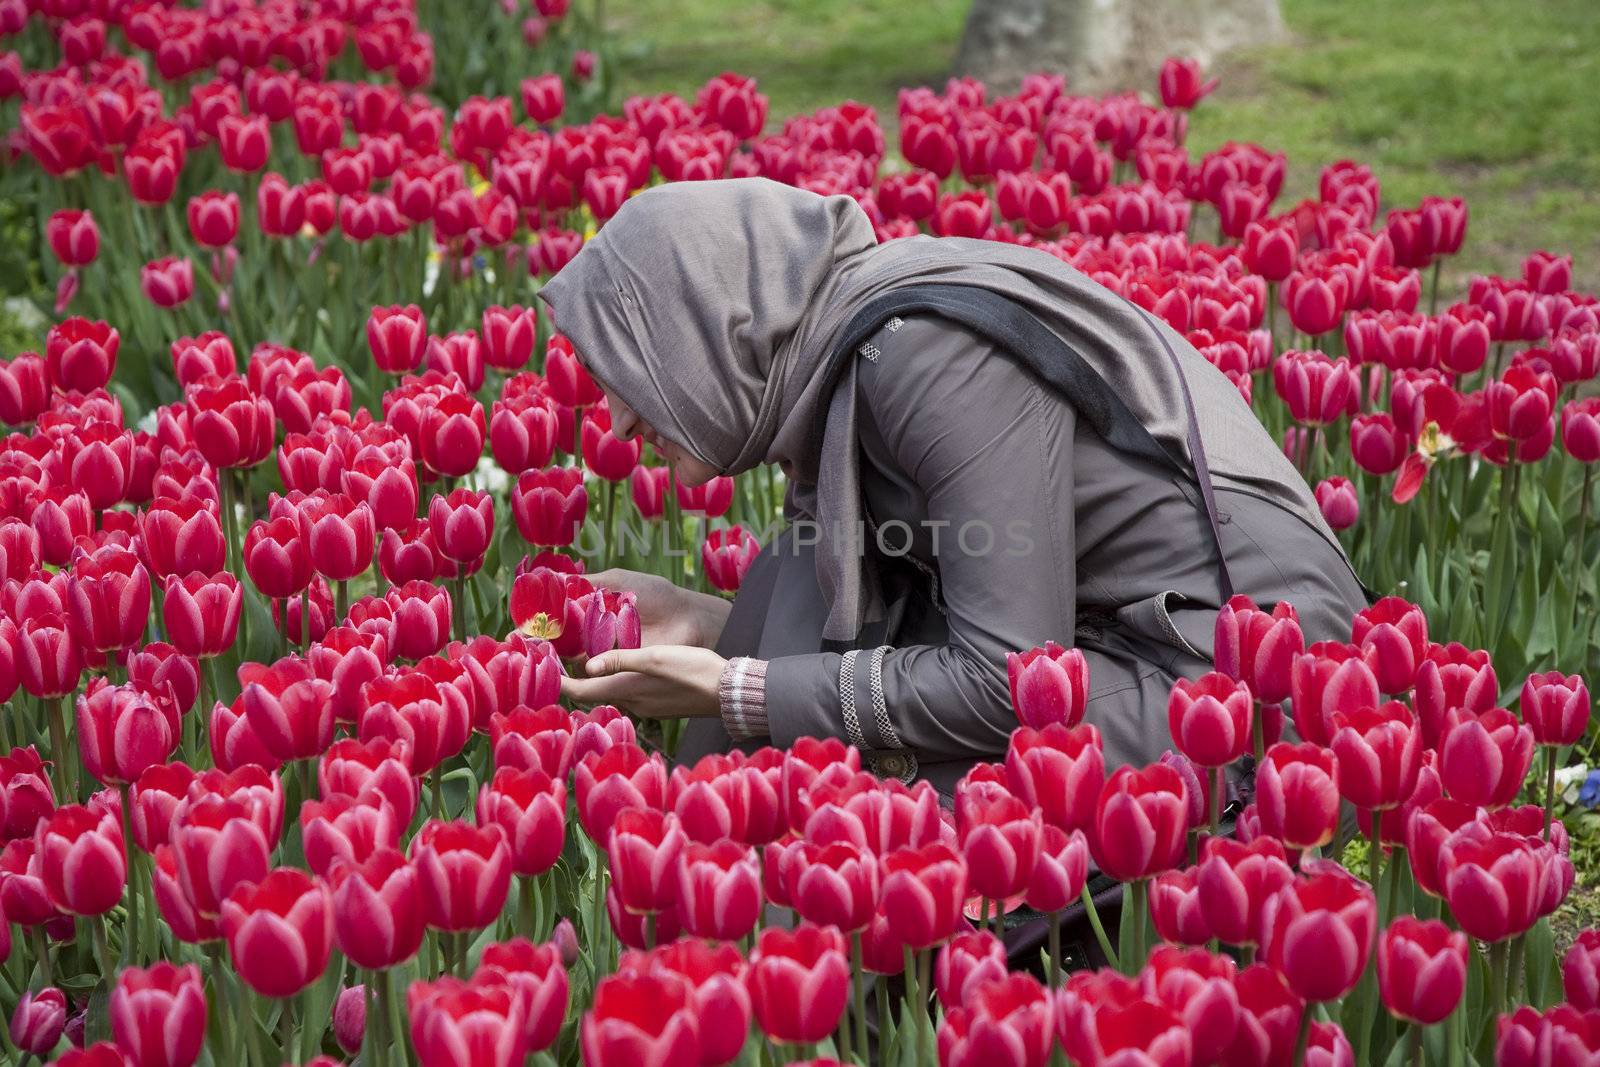 Muslim girl among tulips by ABCDK